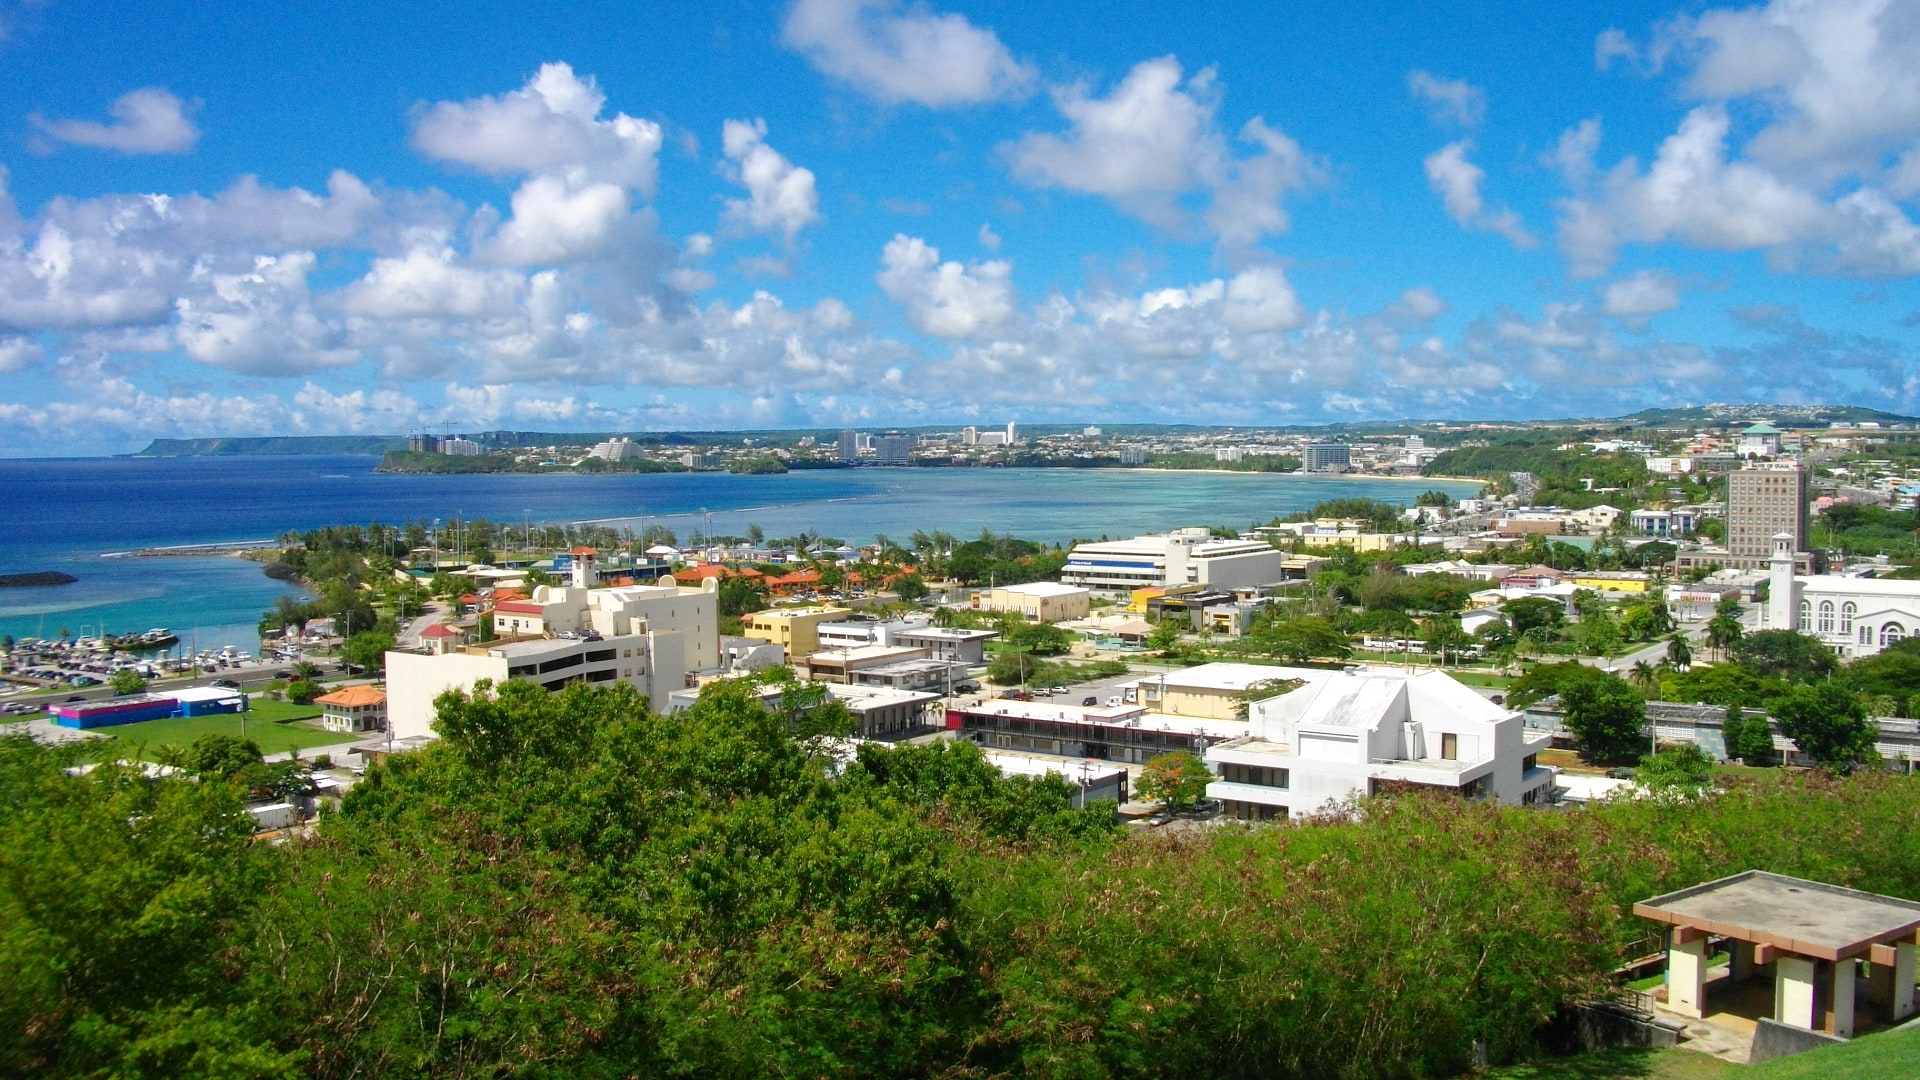 Agaña, Guam